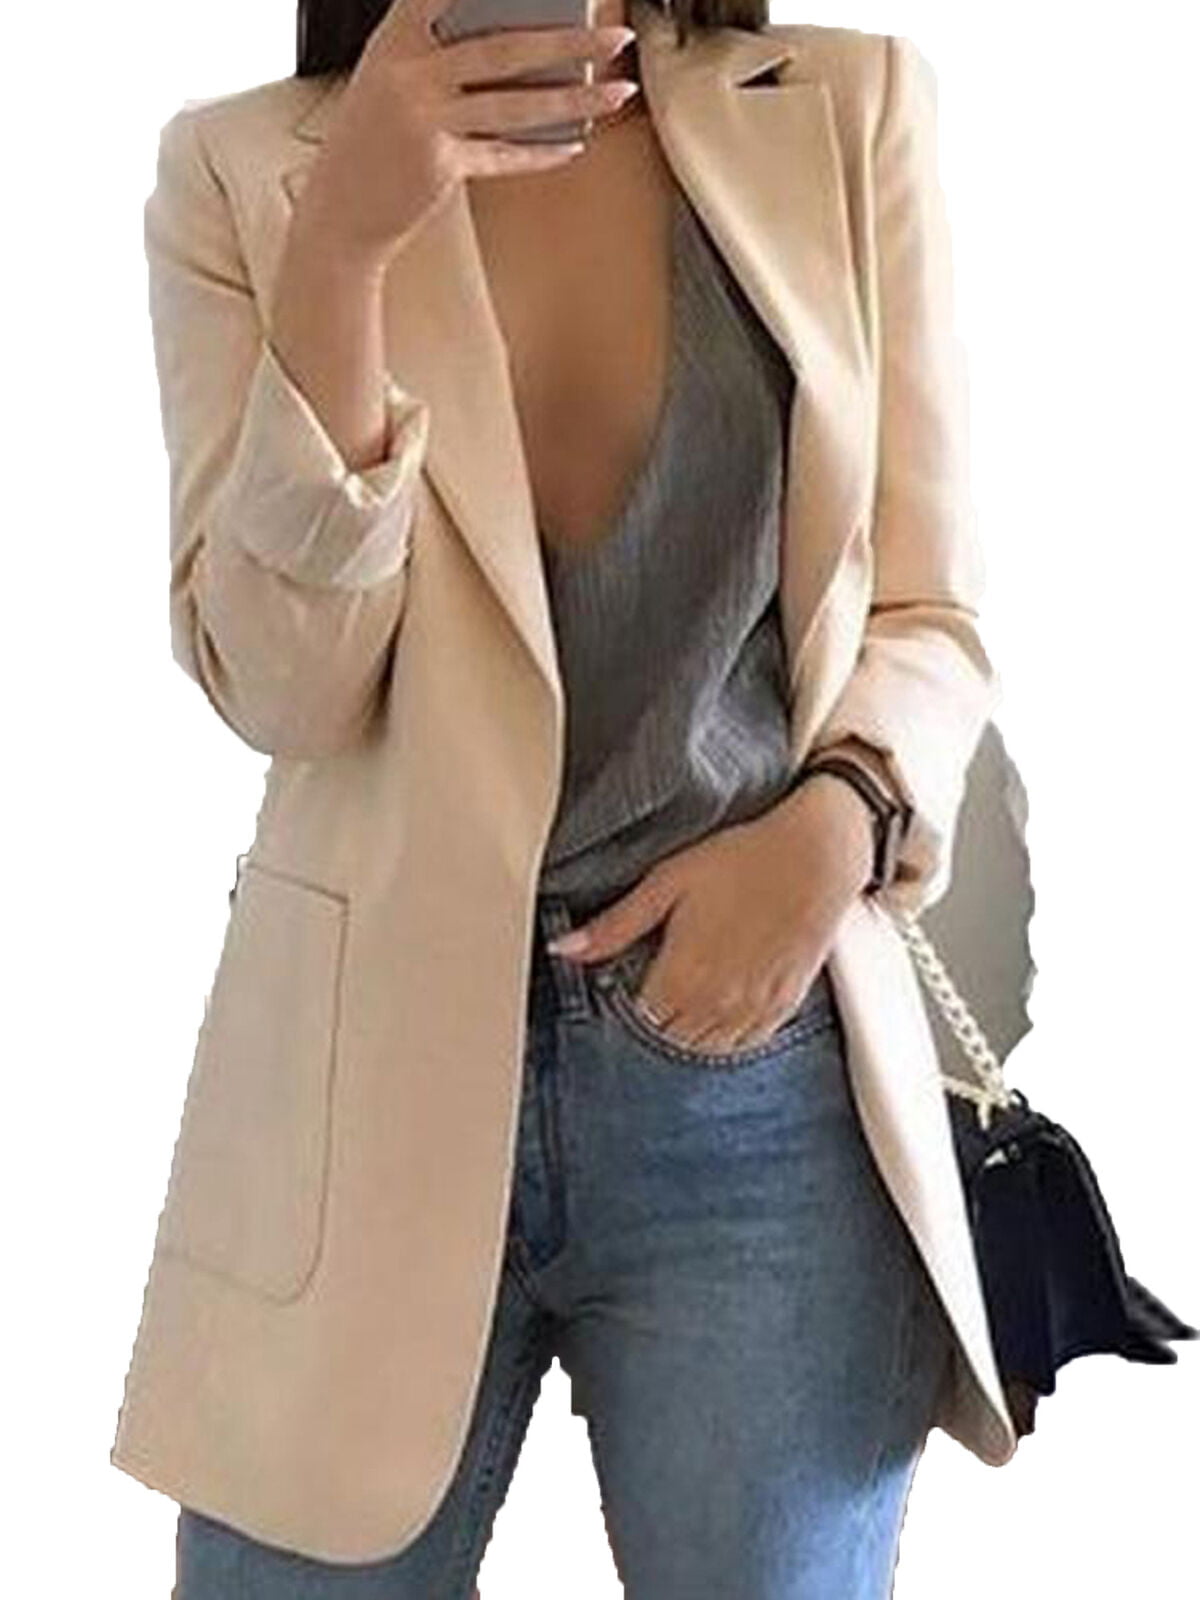 Women Formal Career Outwear Plus Size Top Casual Slim Suit Jacket Coat 